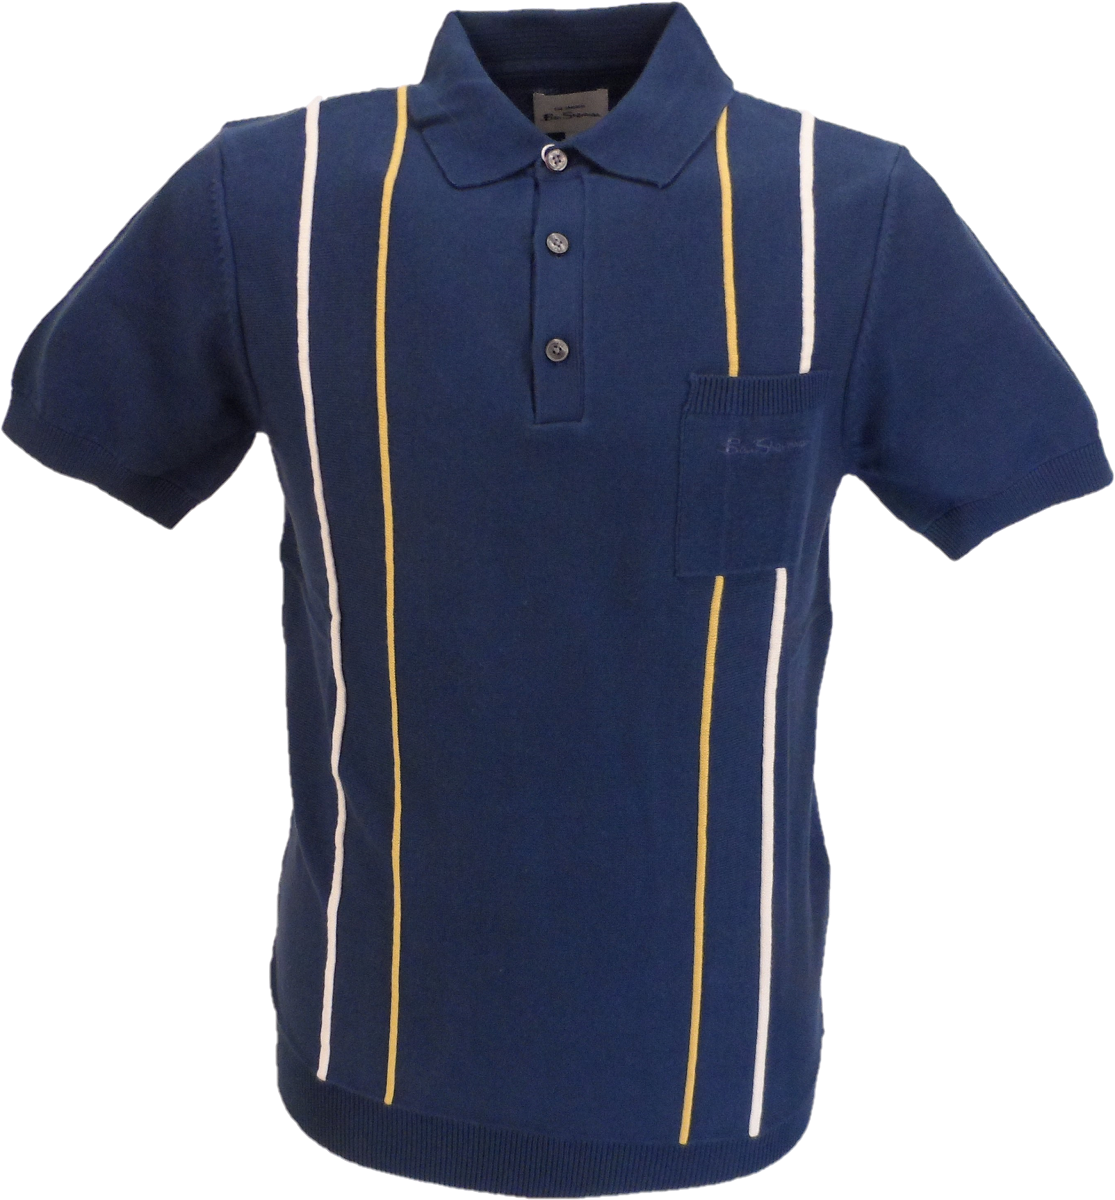 Ben Sherman Denim Blue Knitted Striped Mod Polo Shirt